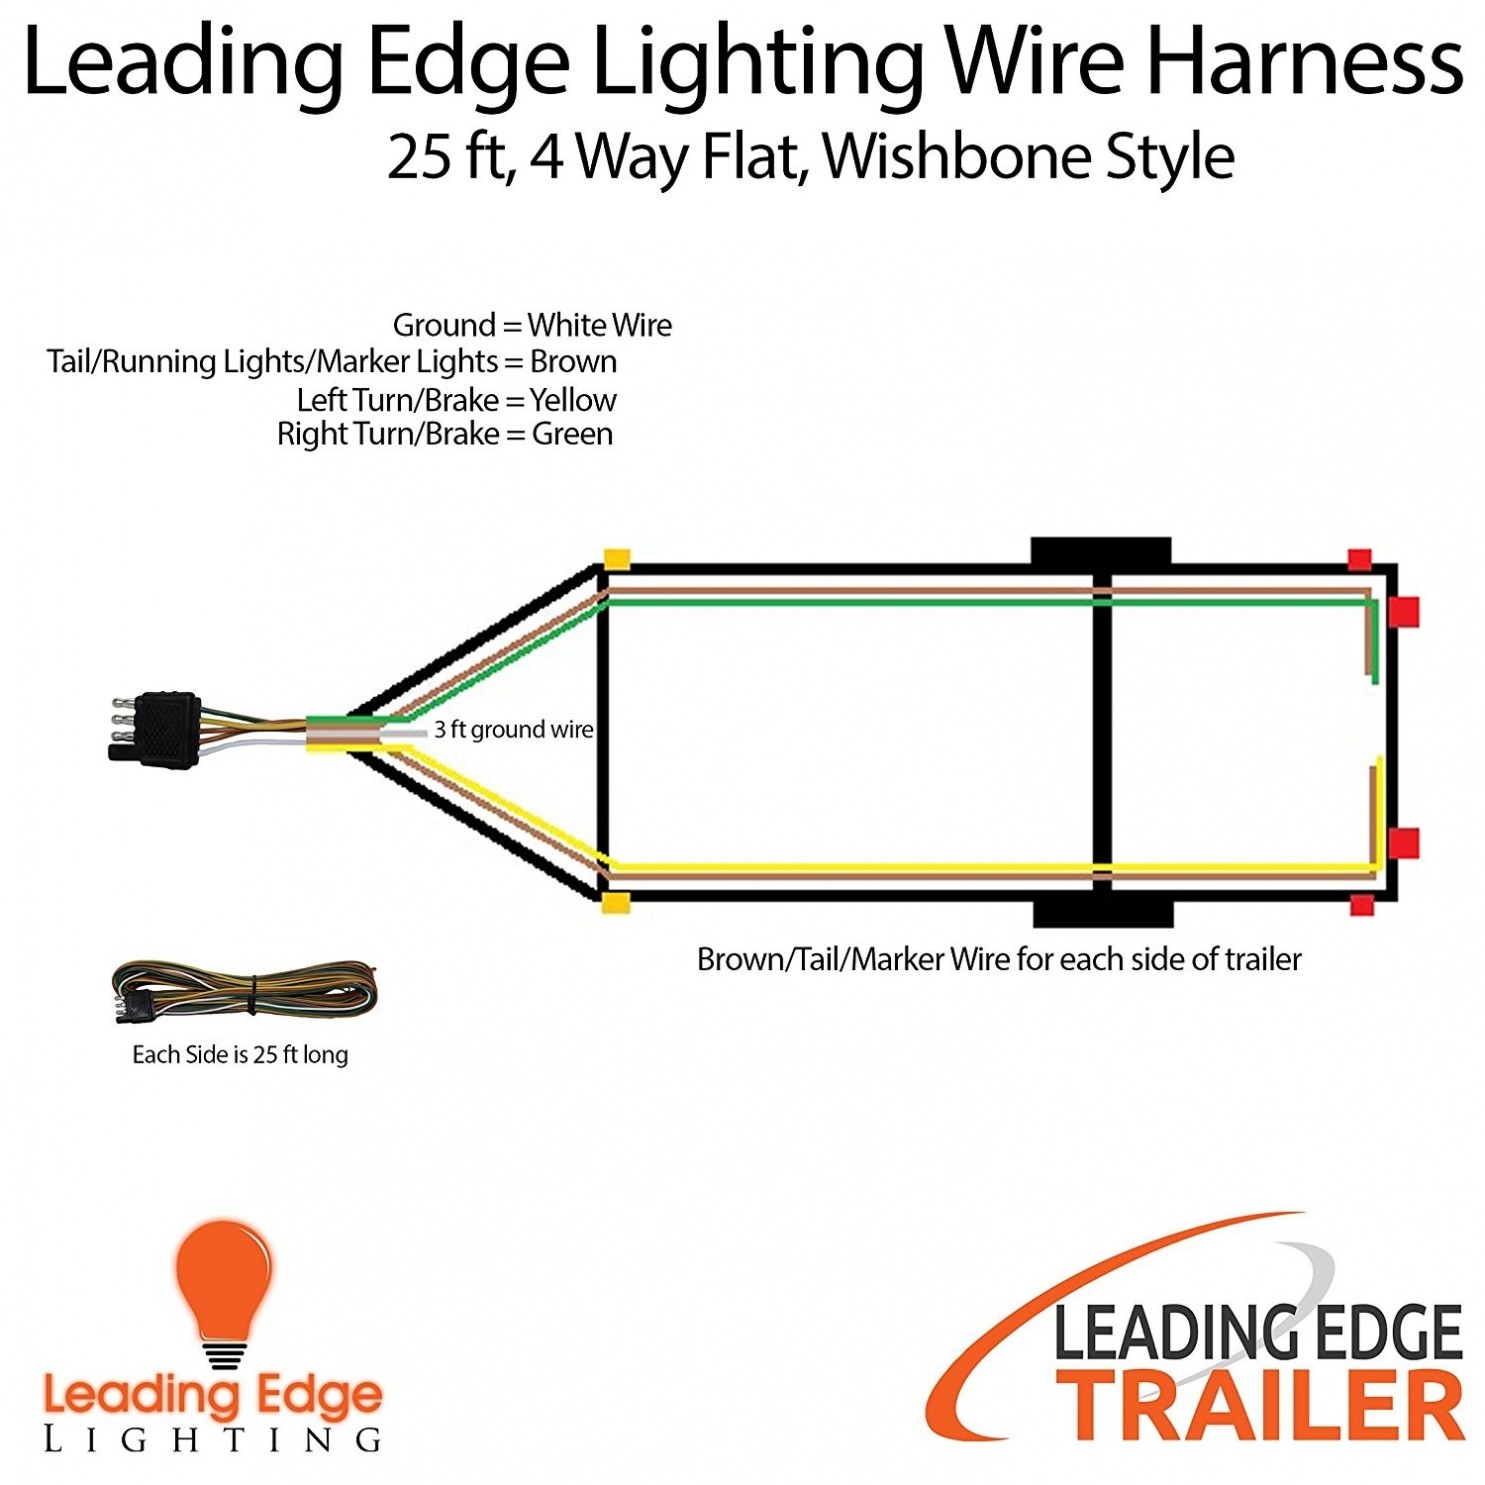 Trailer Light Wiring Diagram 4 Wire Horse Trailer Wiring Diagram Luxury How Do You Wire A Trailer with Of Trailer Light Wiring Diagram 4 Wire